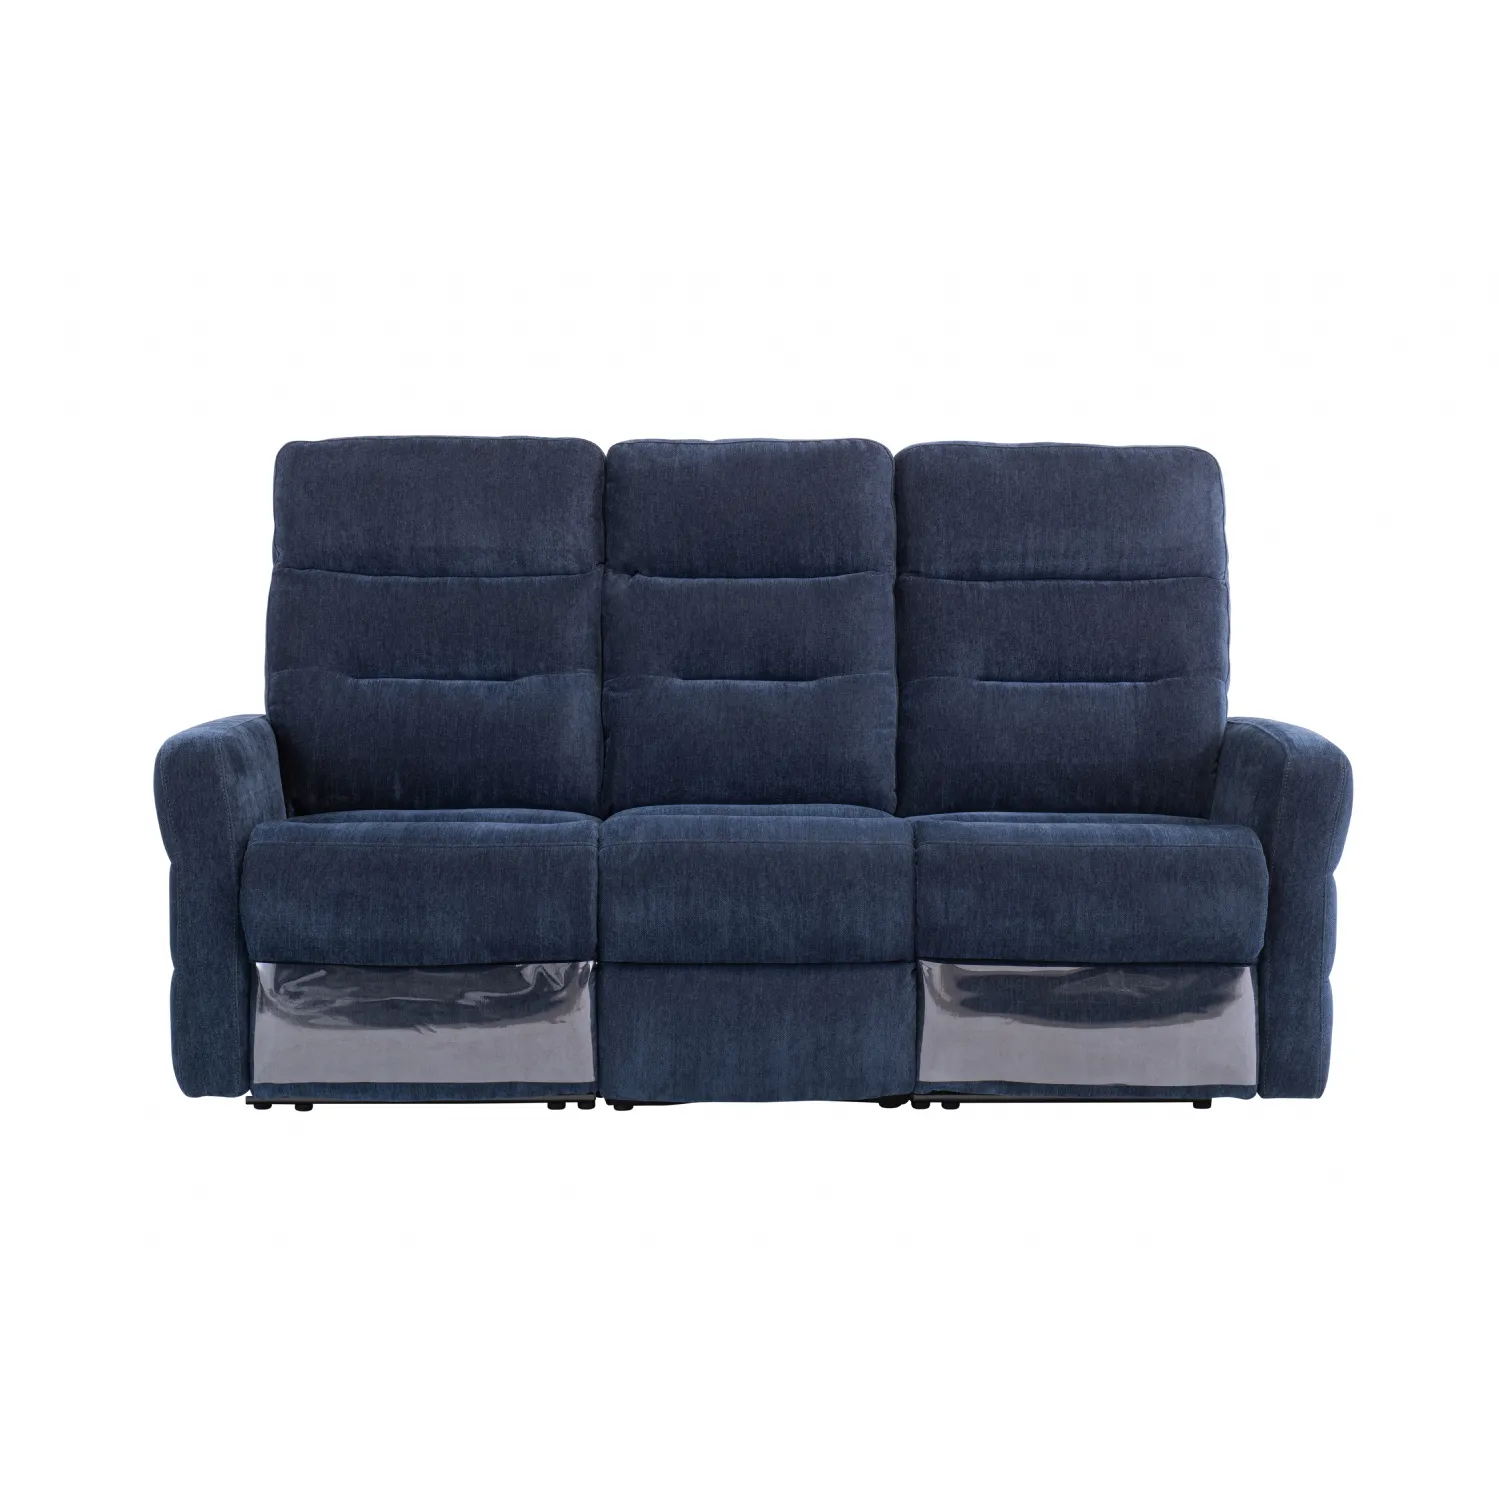 Navy Blue Herringbone Fabric Electric Recliner 2 Seat Sofa